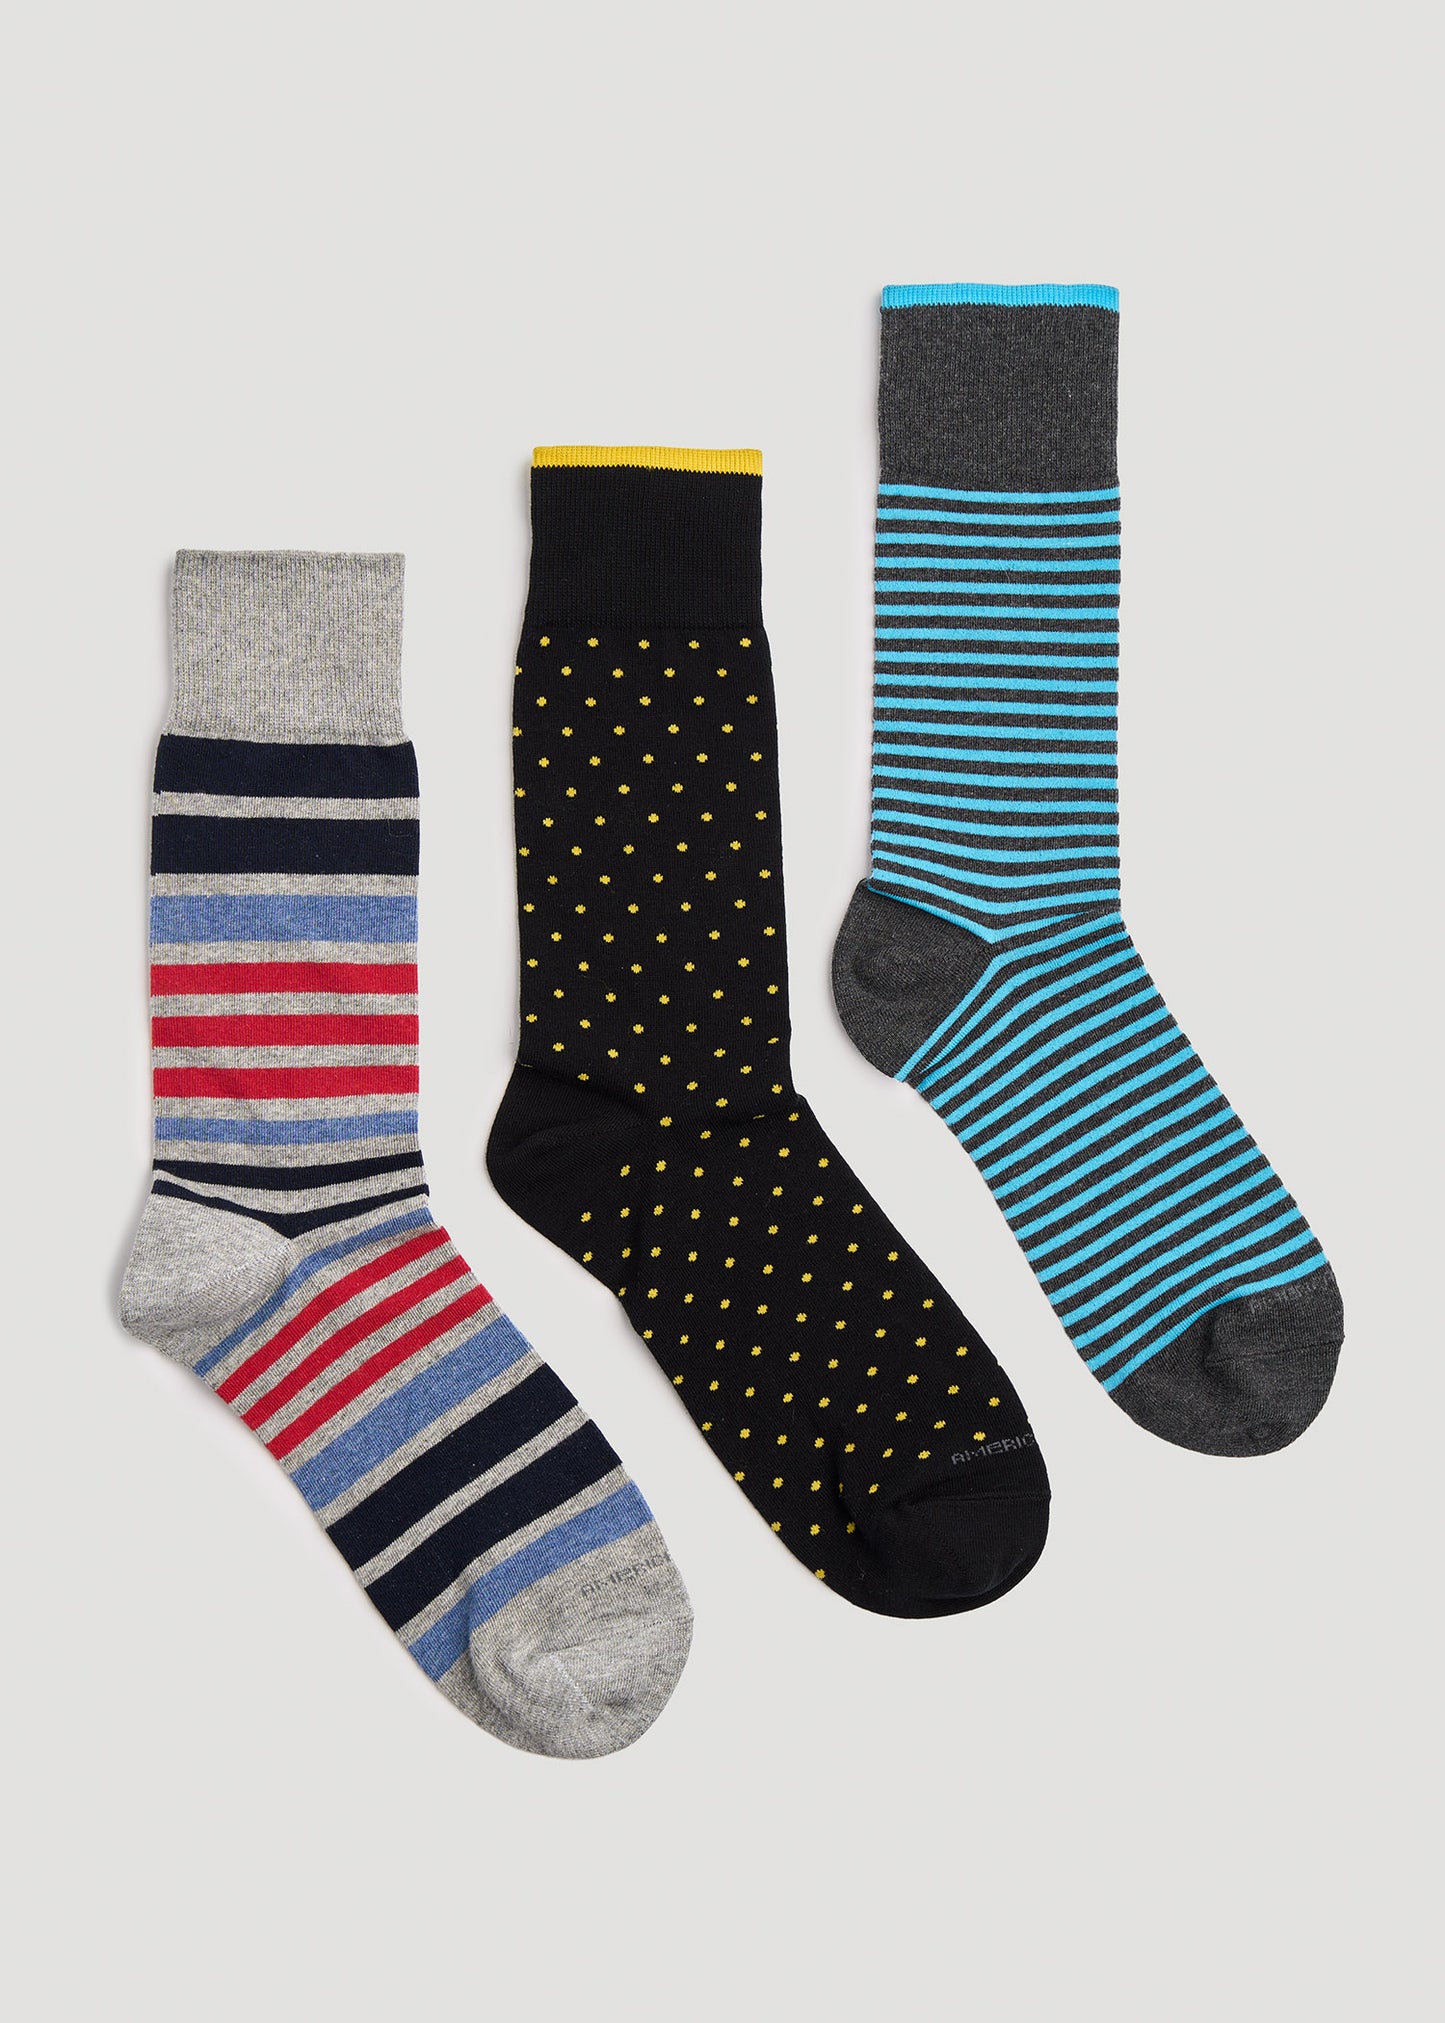 Best Socks For Men | A Man's Guide to Buying Dress Socks